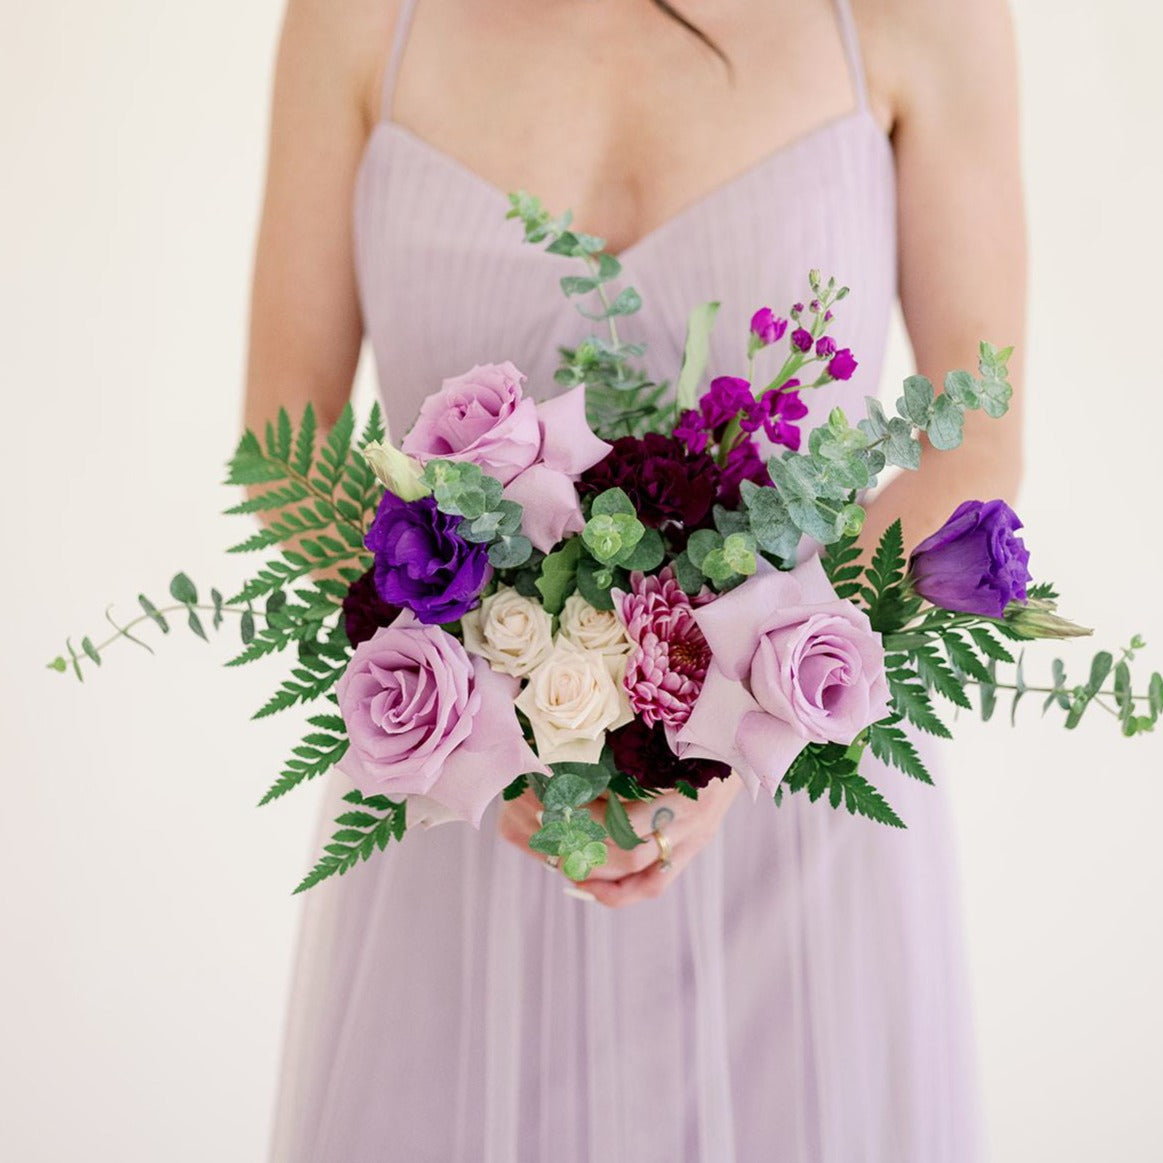 BRI017 - Bridal Bouquet Lavender Ocean Song Roses in Fort Lauderdale, FL